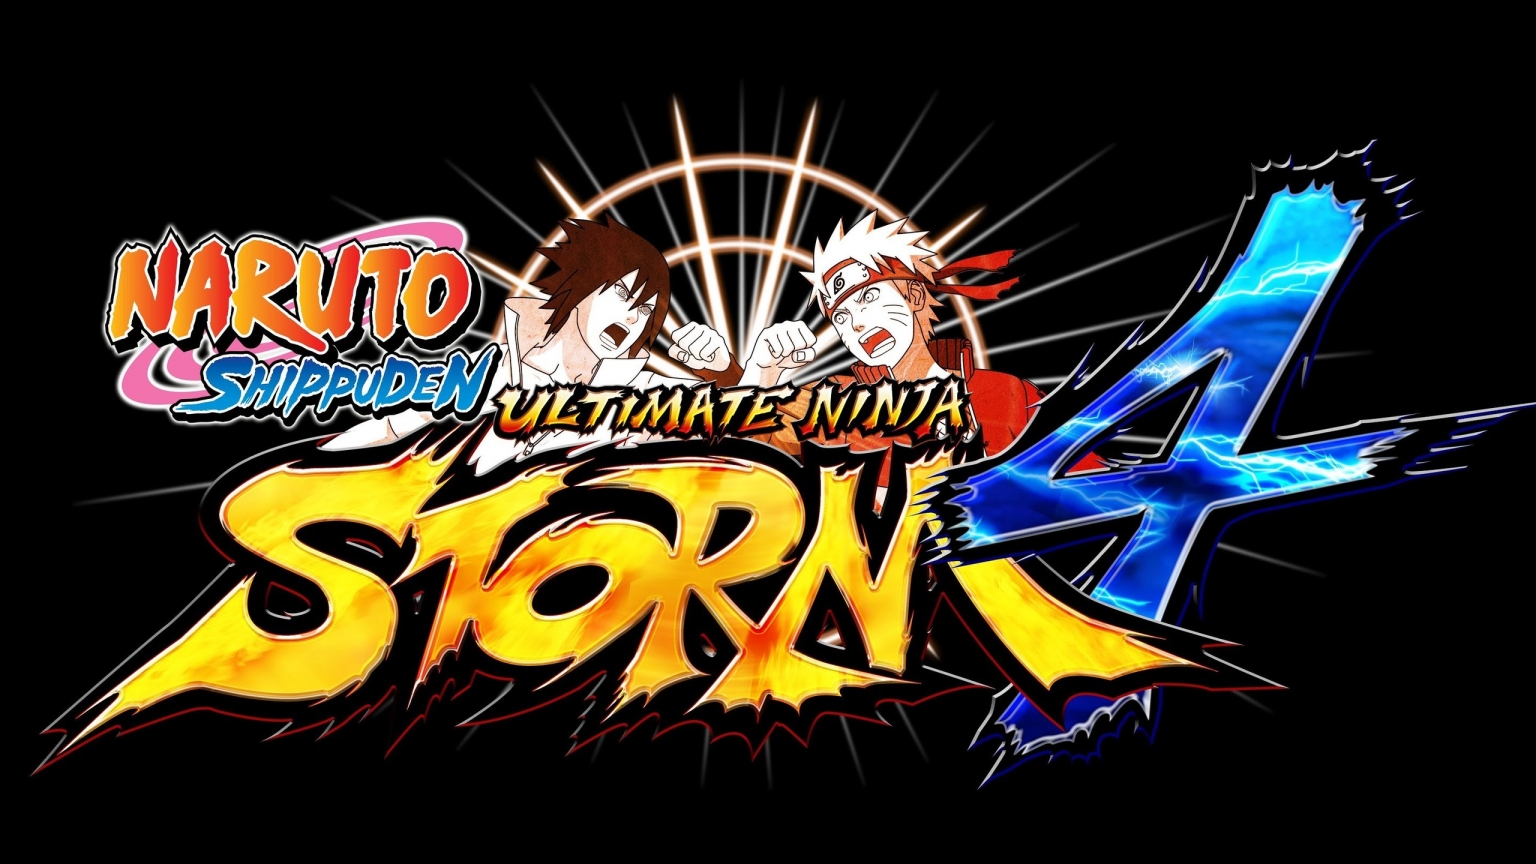 Naruto Shippuden Ultimate Ninja Storm 4 Poster for 1536 x 864 HDTV resolution